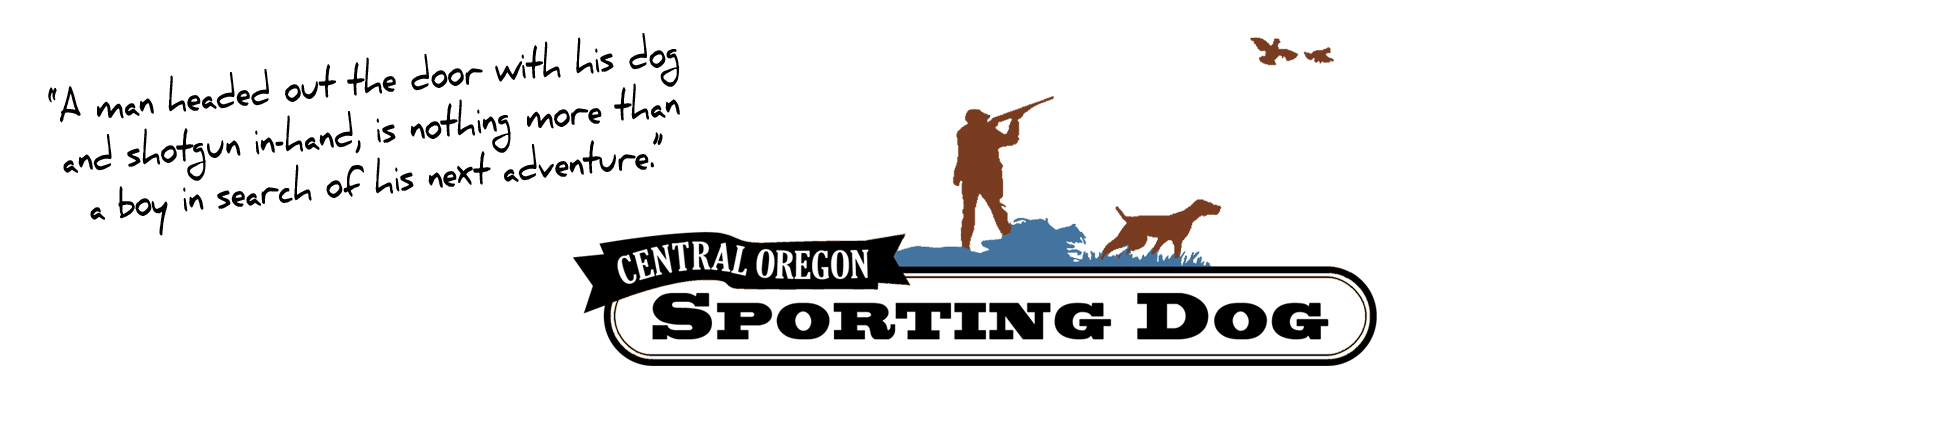 Central Oregon Sporting Dog